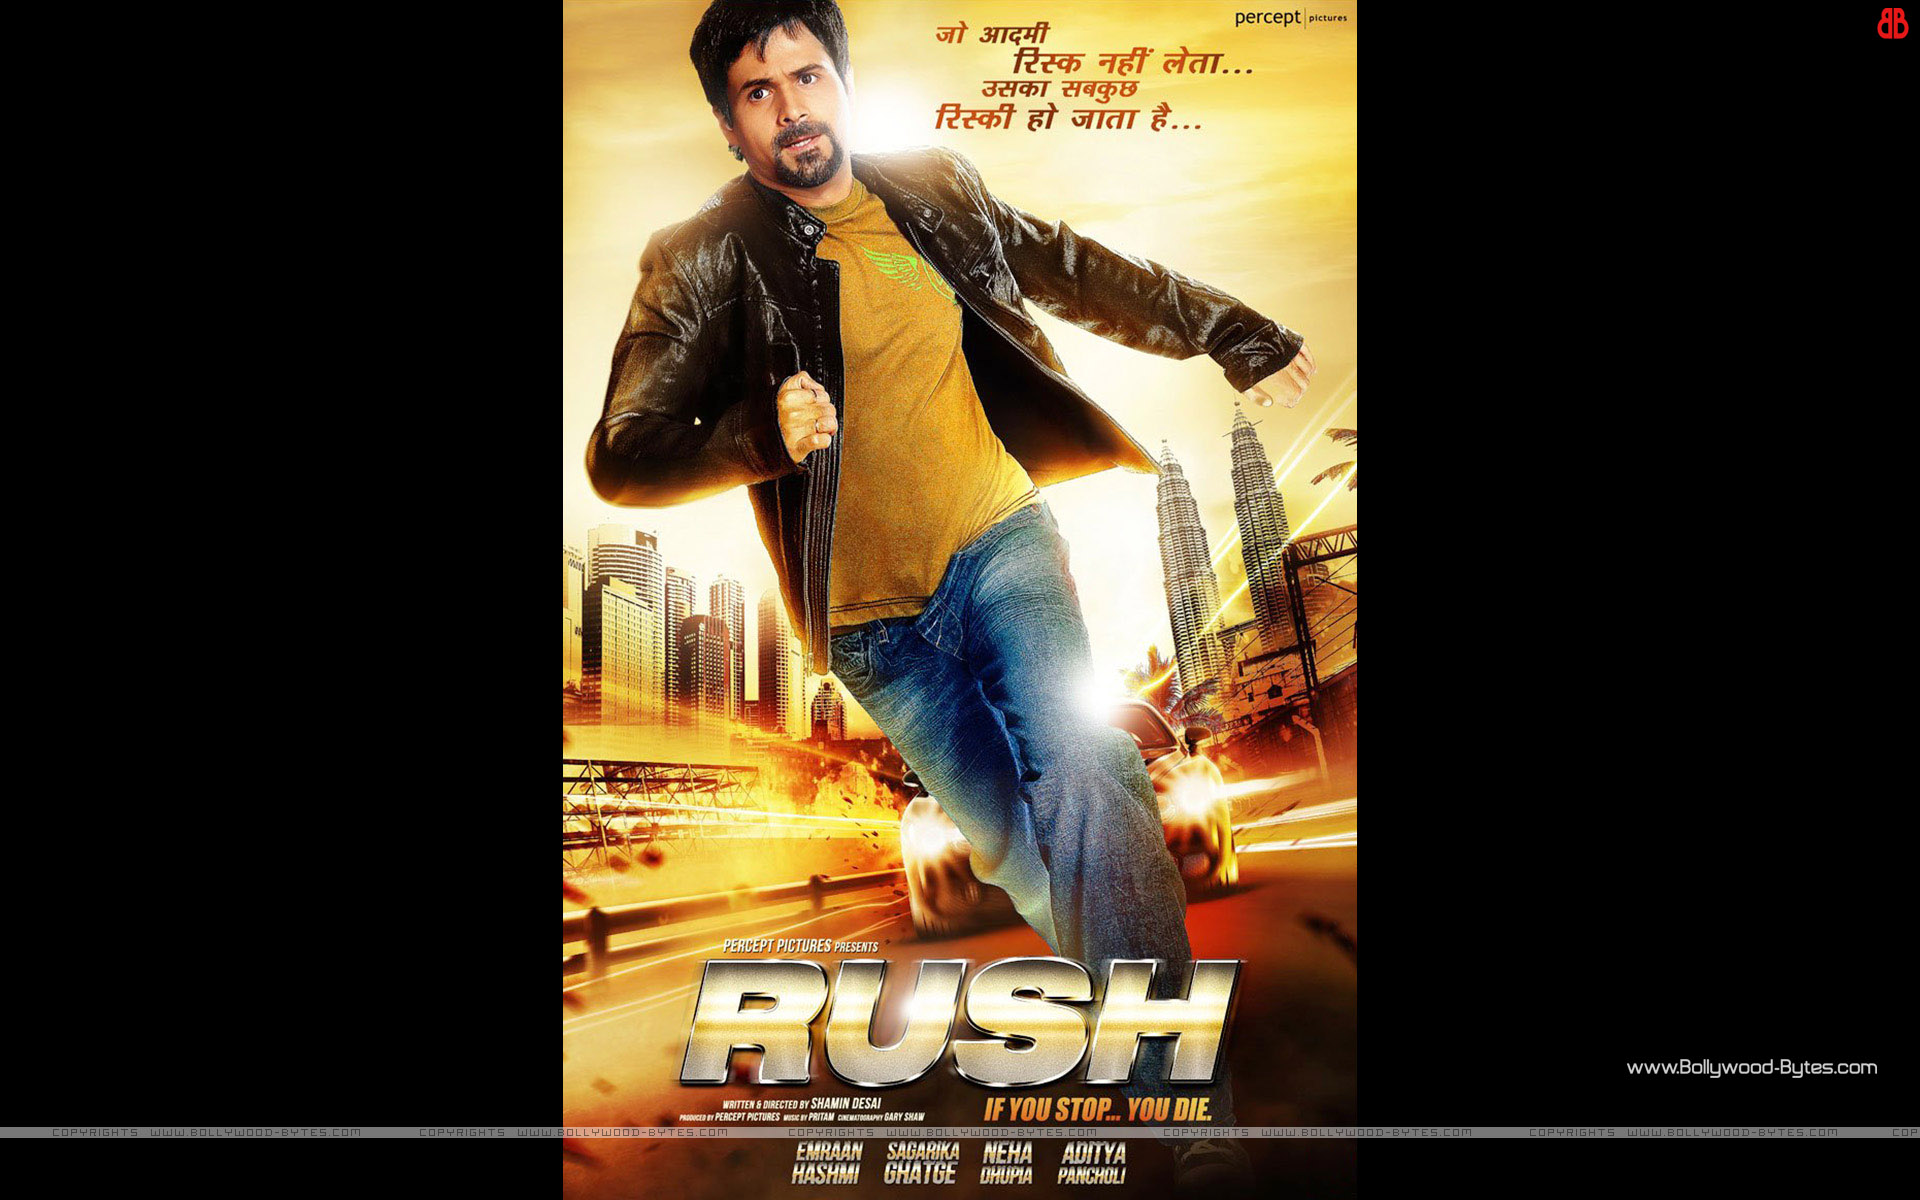 Rush HD Wallpaper Starring Emraan Hashmi